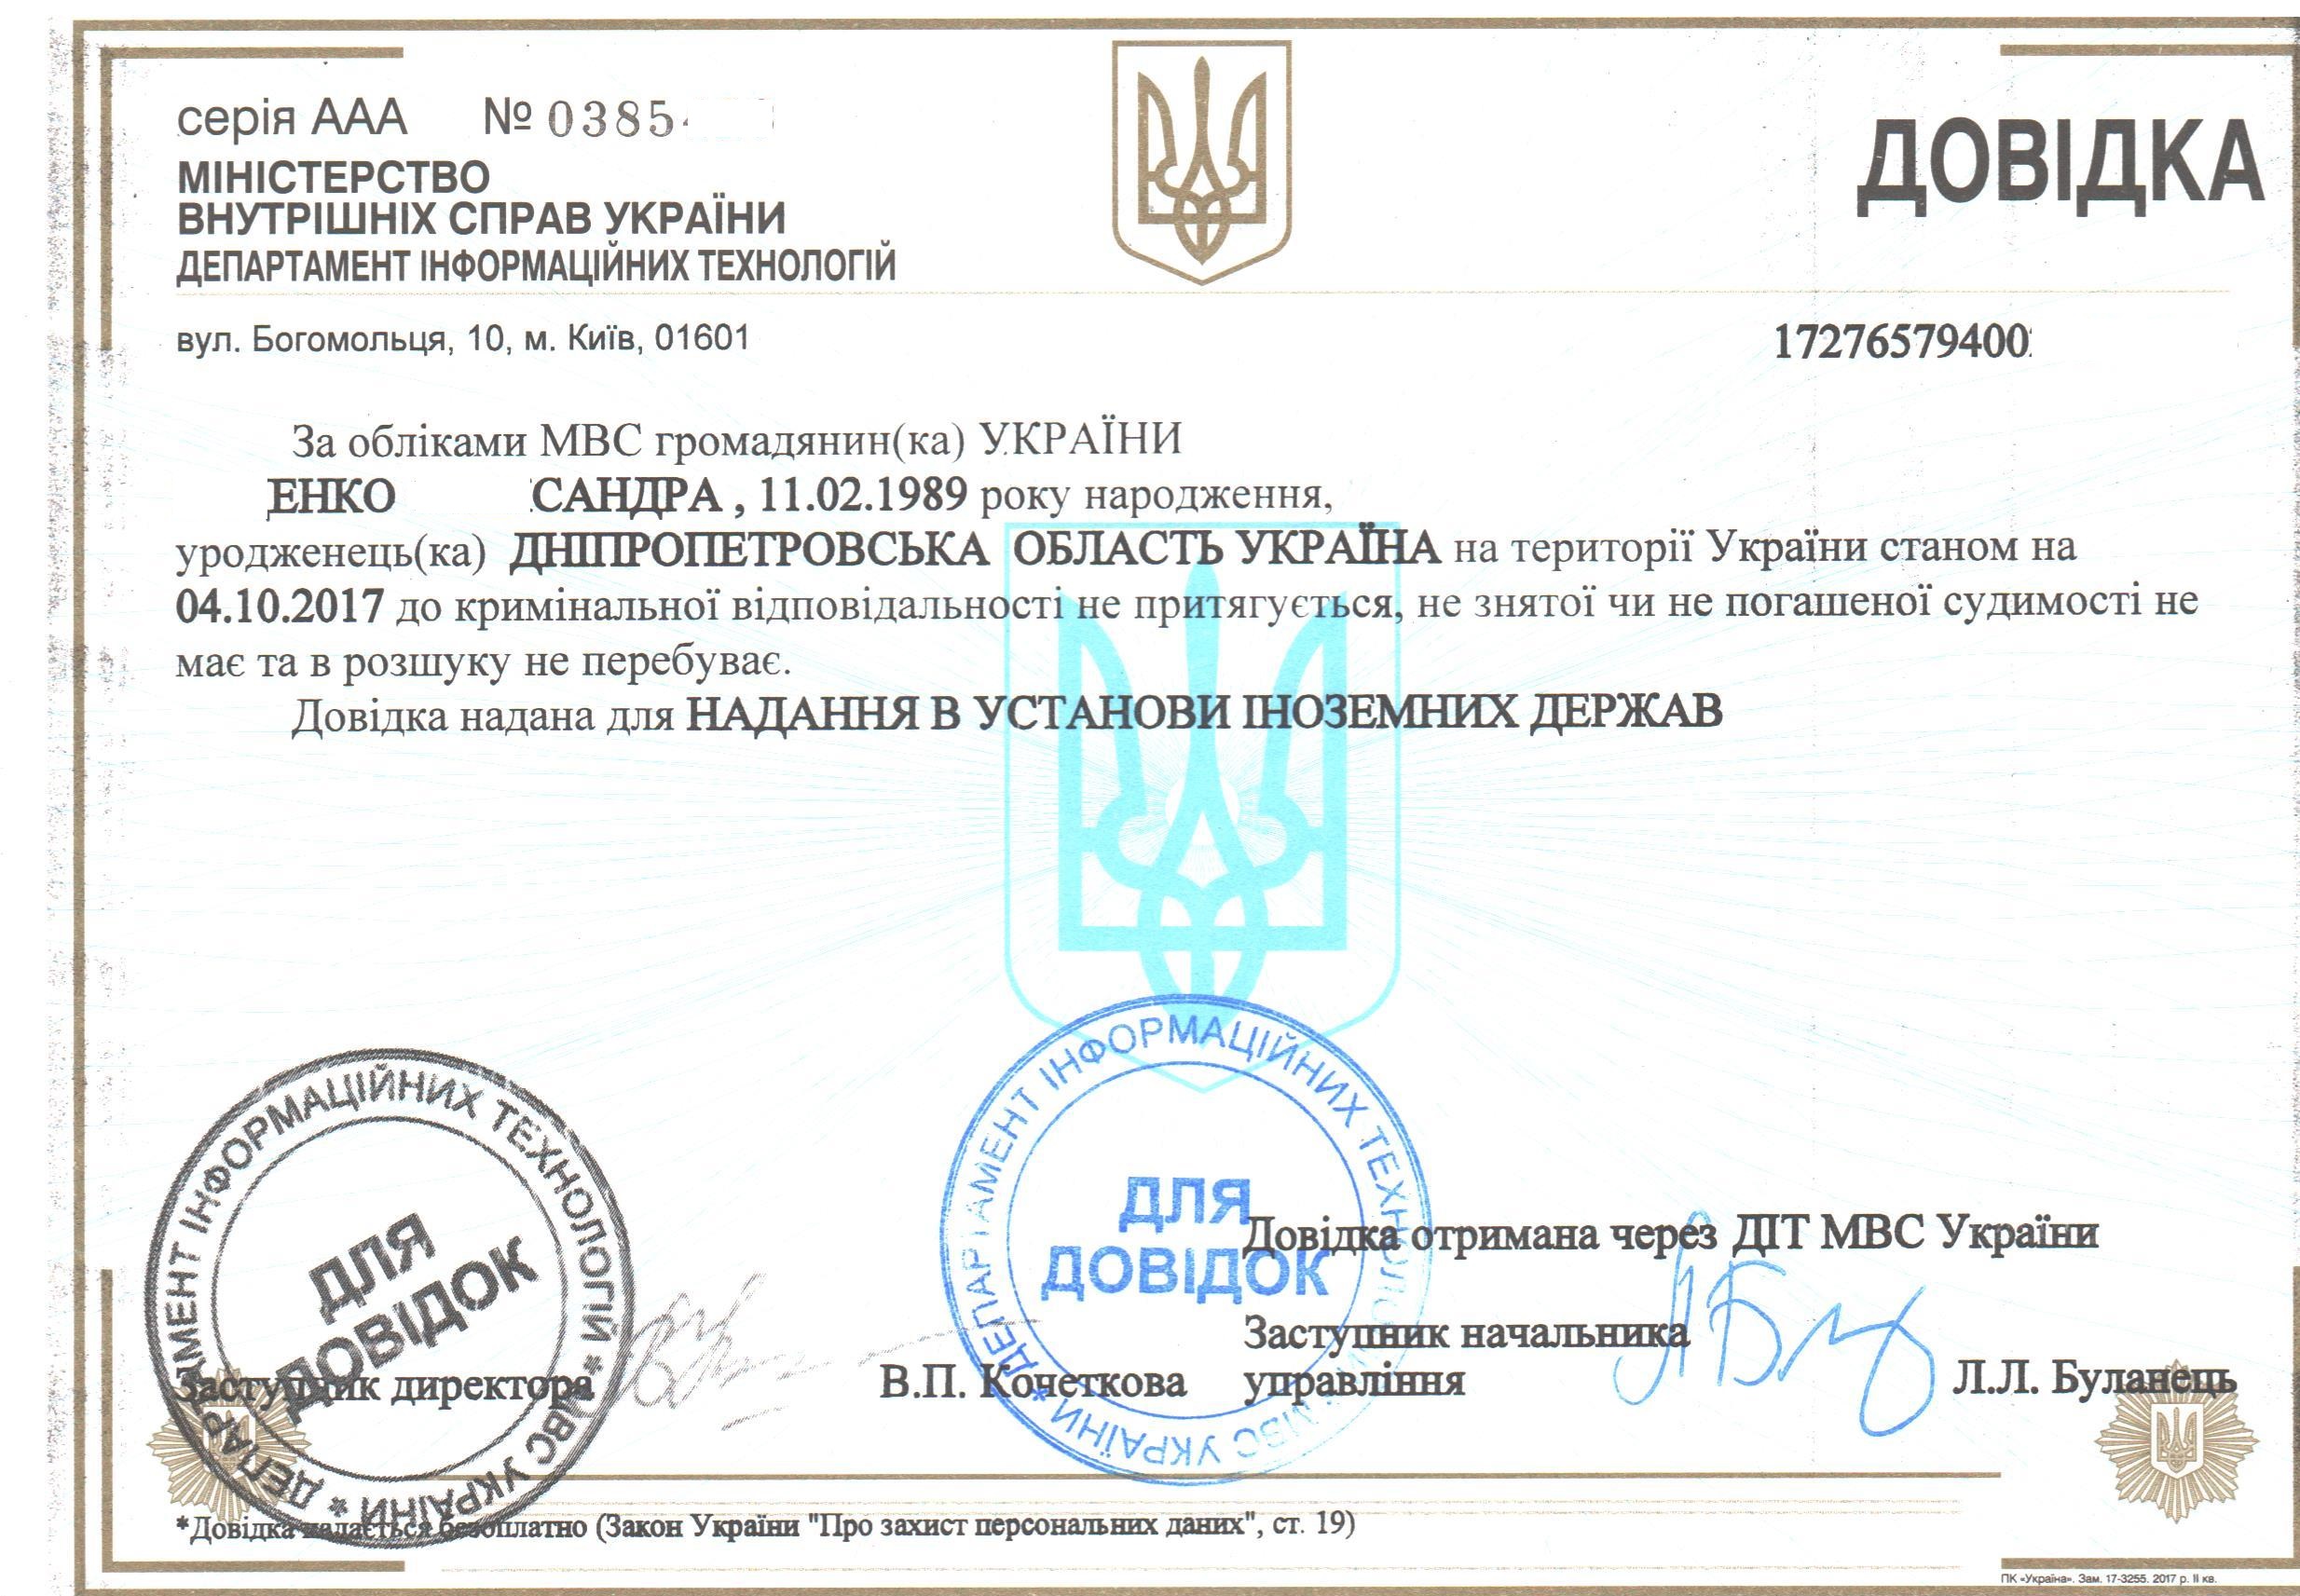 Police clearance certificate in Kiev/Kyiv and Kiev region